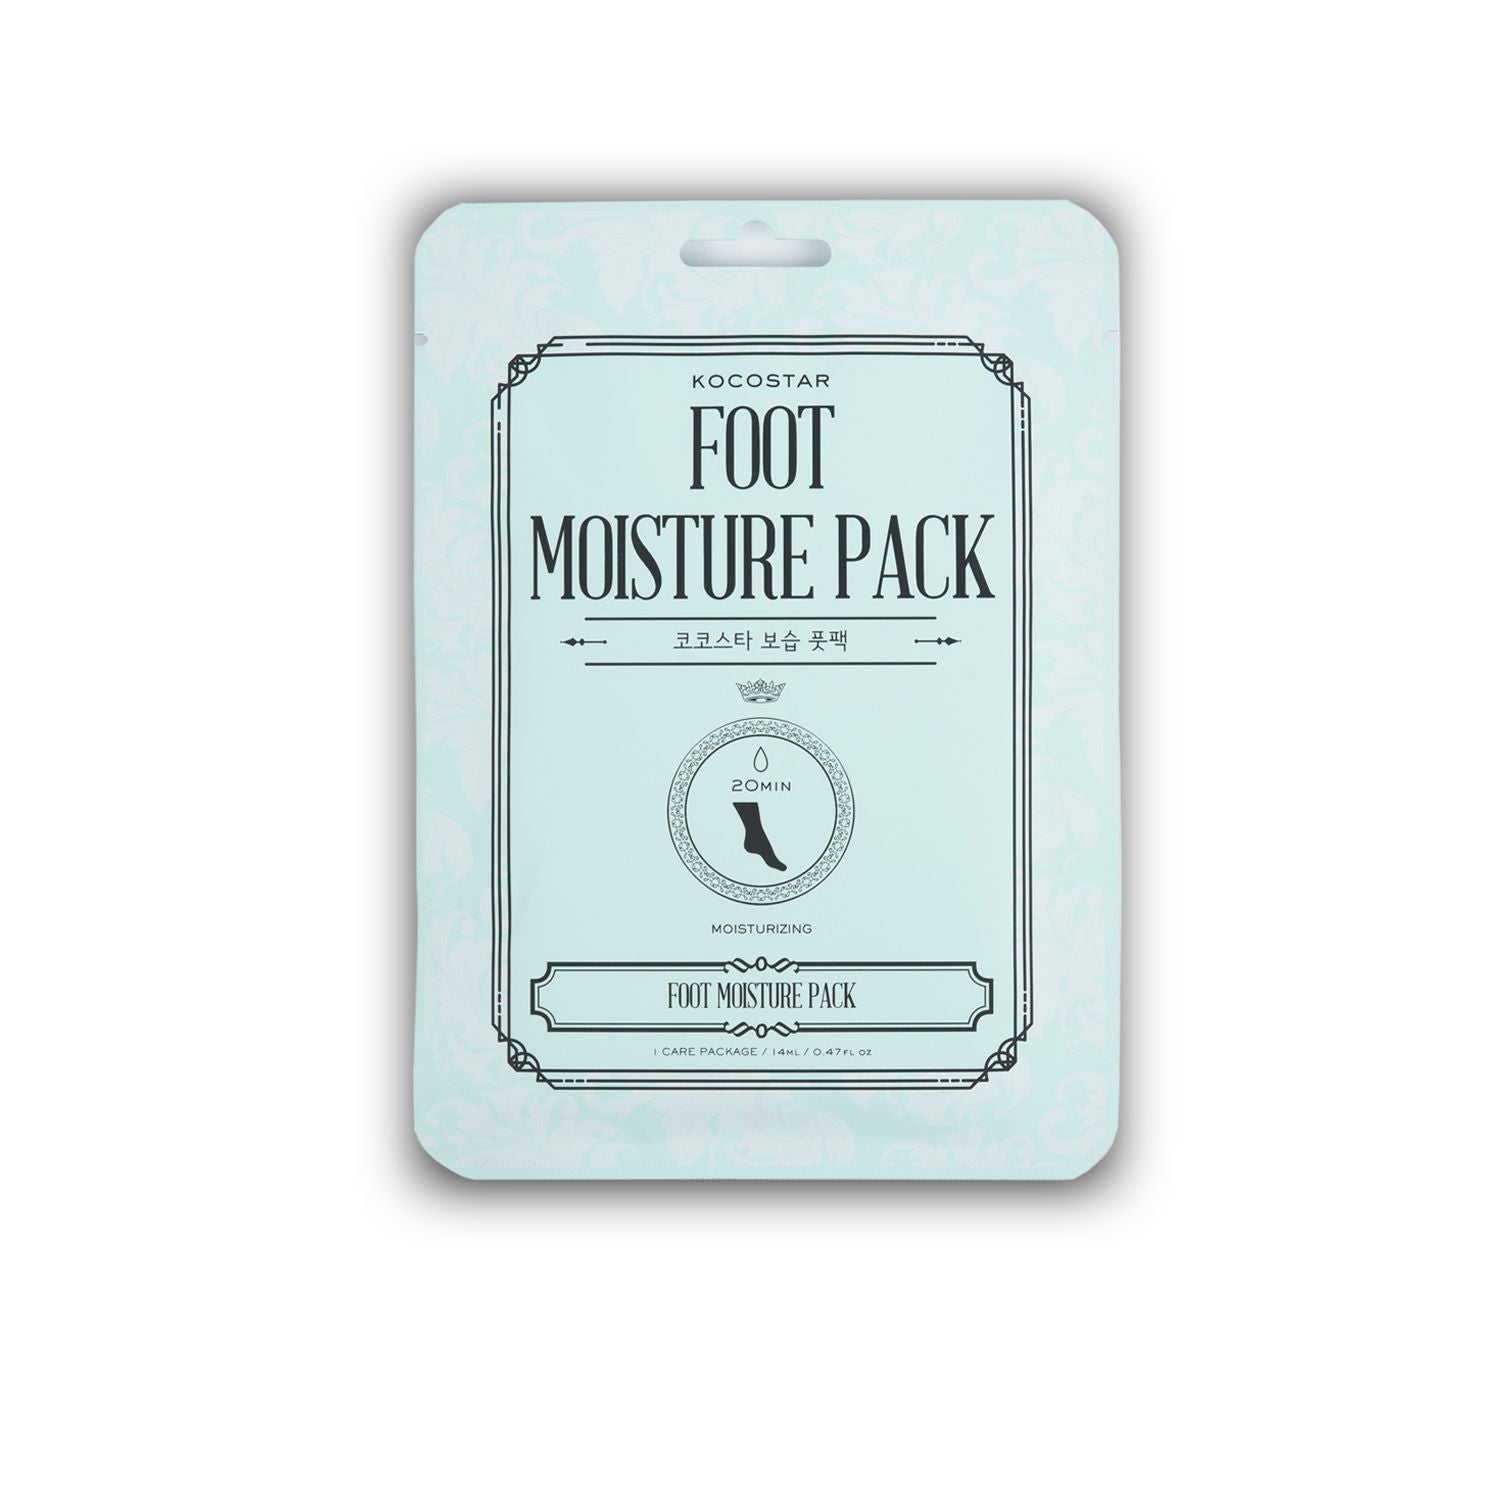 KOCOSTAR Foot Moisture Pack - jalkanaamio 1 pari